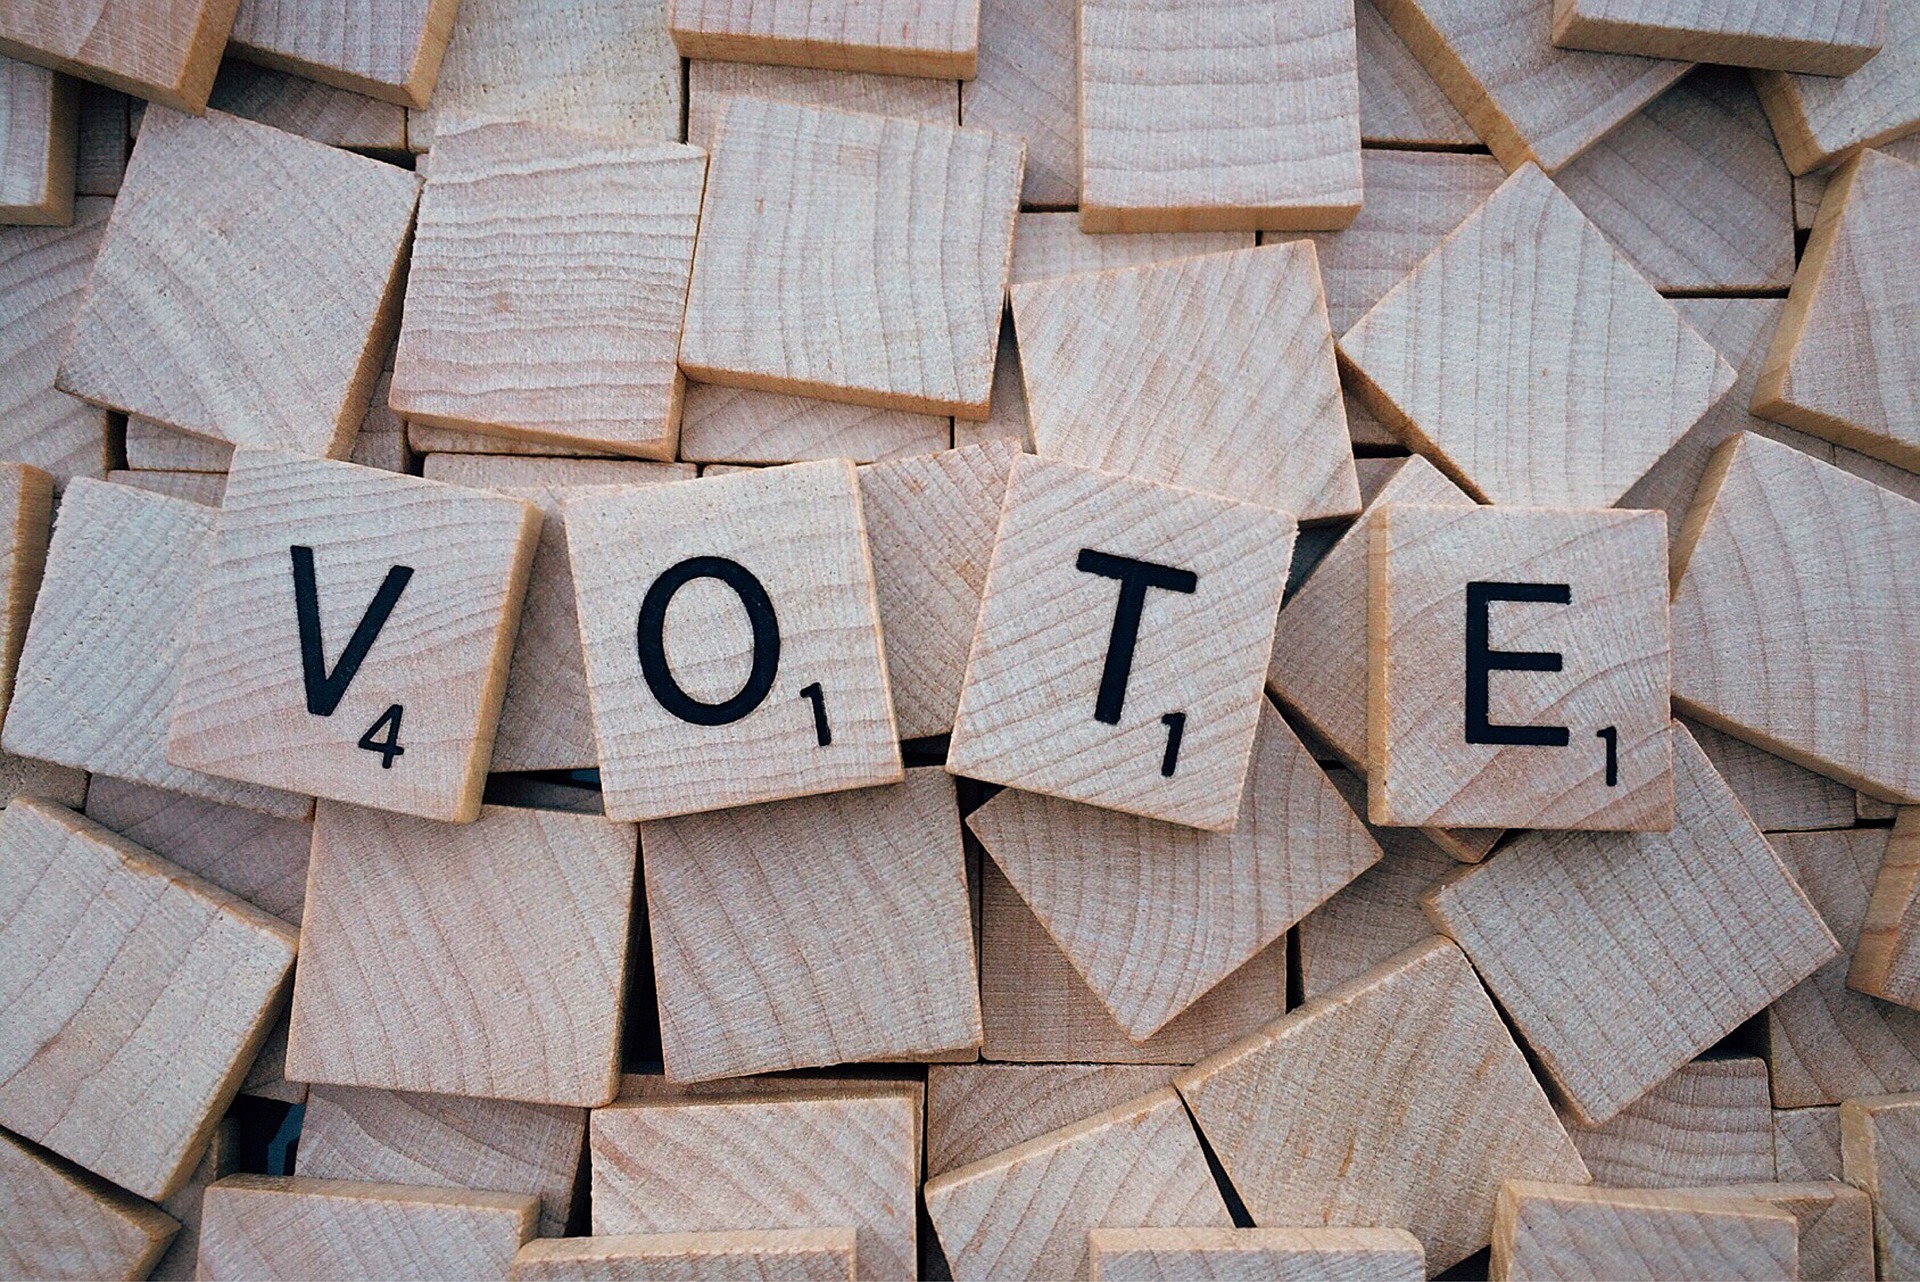 "VOTE" spelled in Scrabble tiles